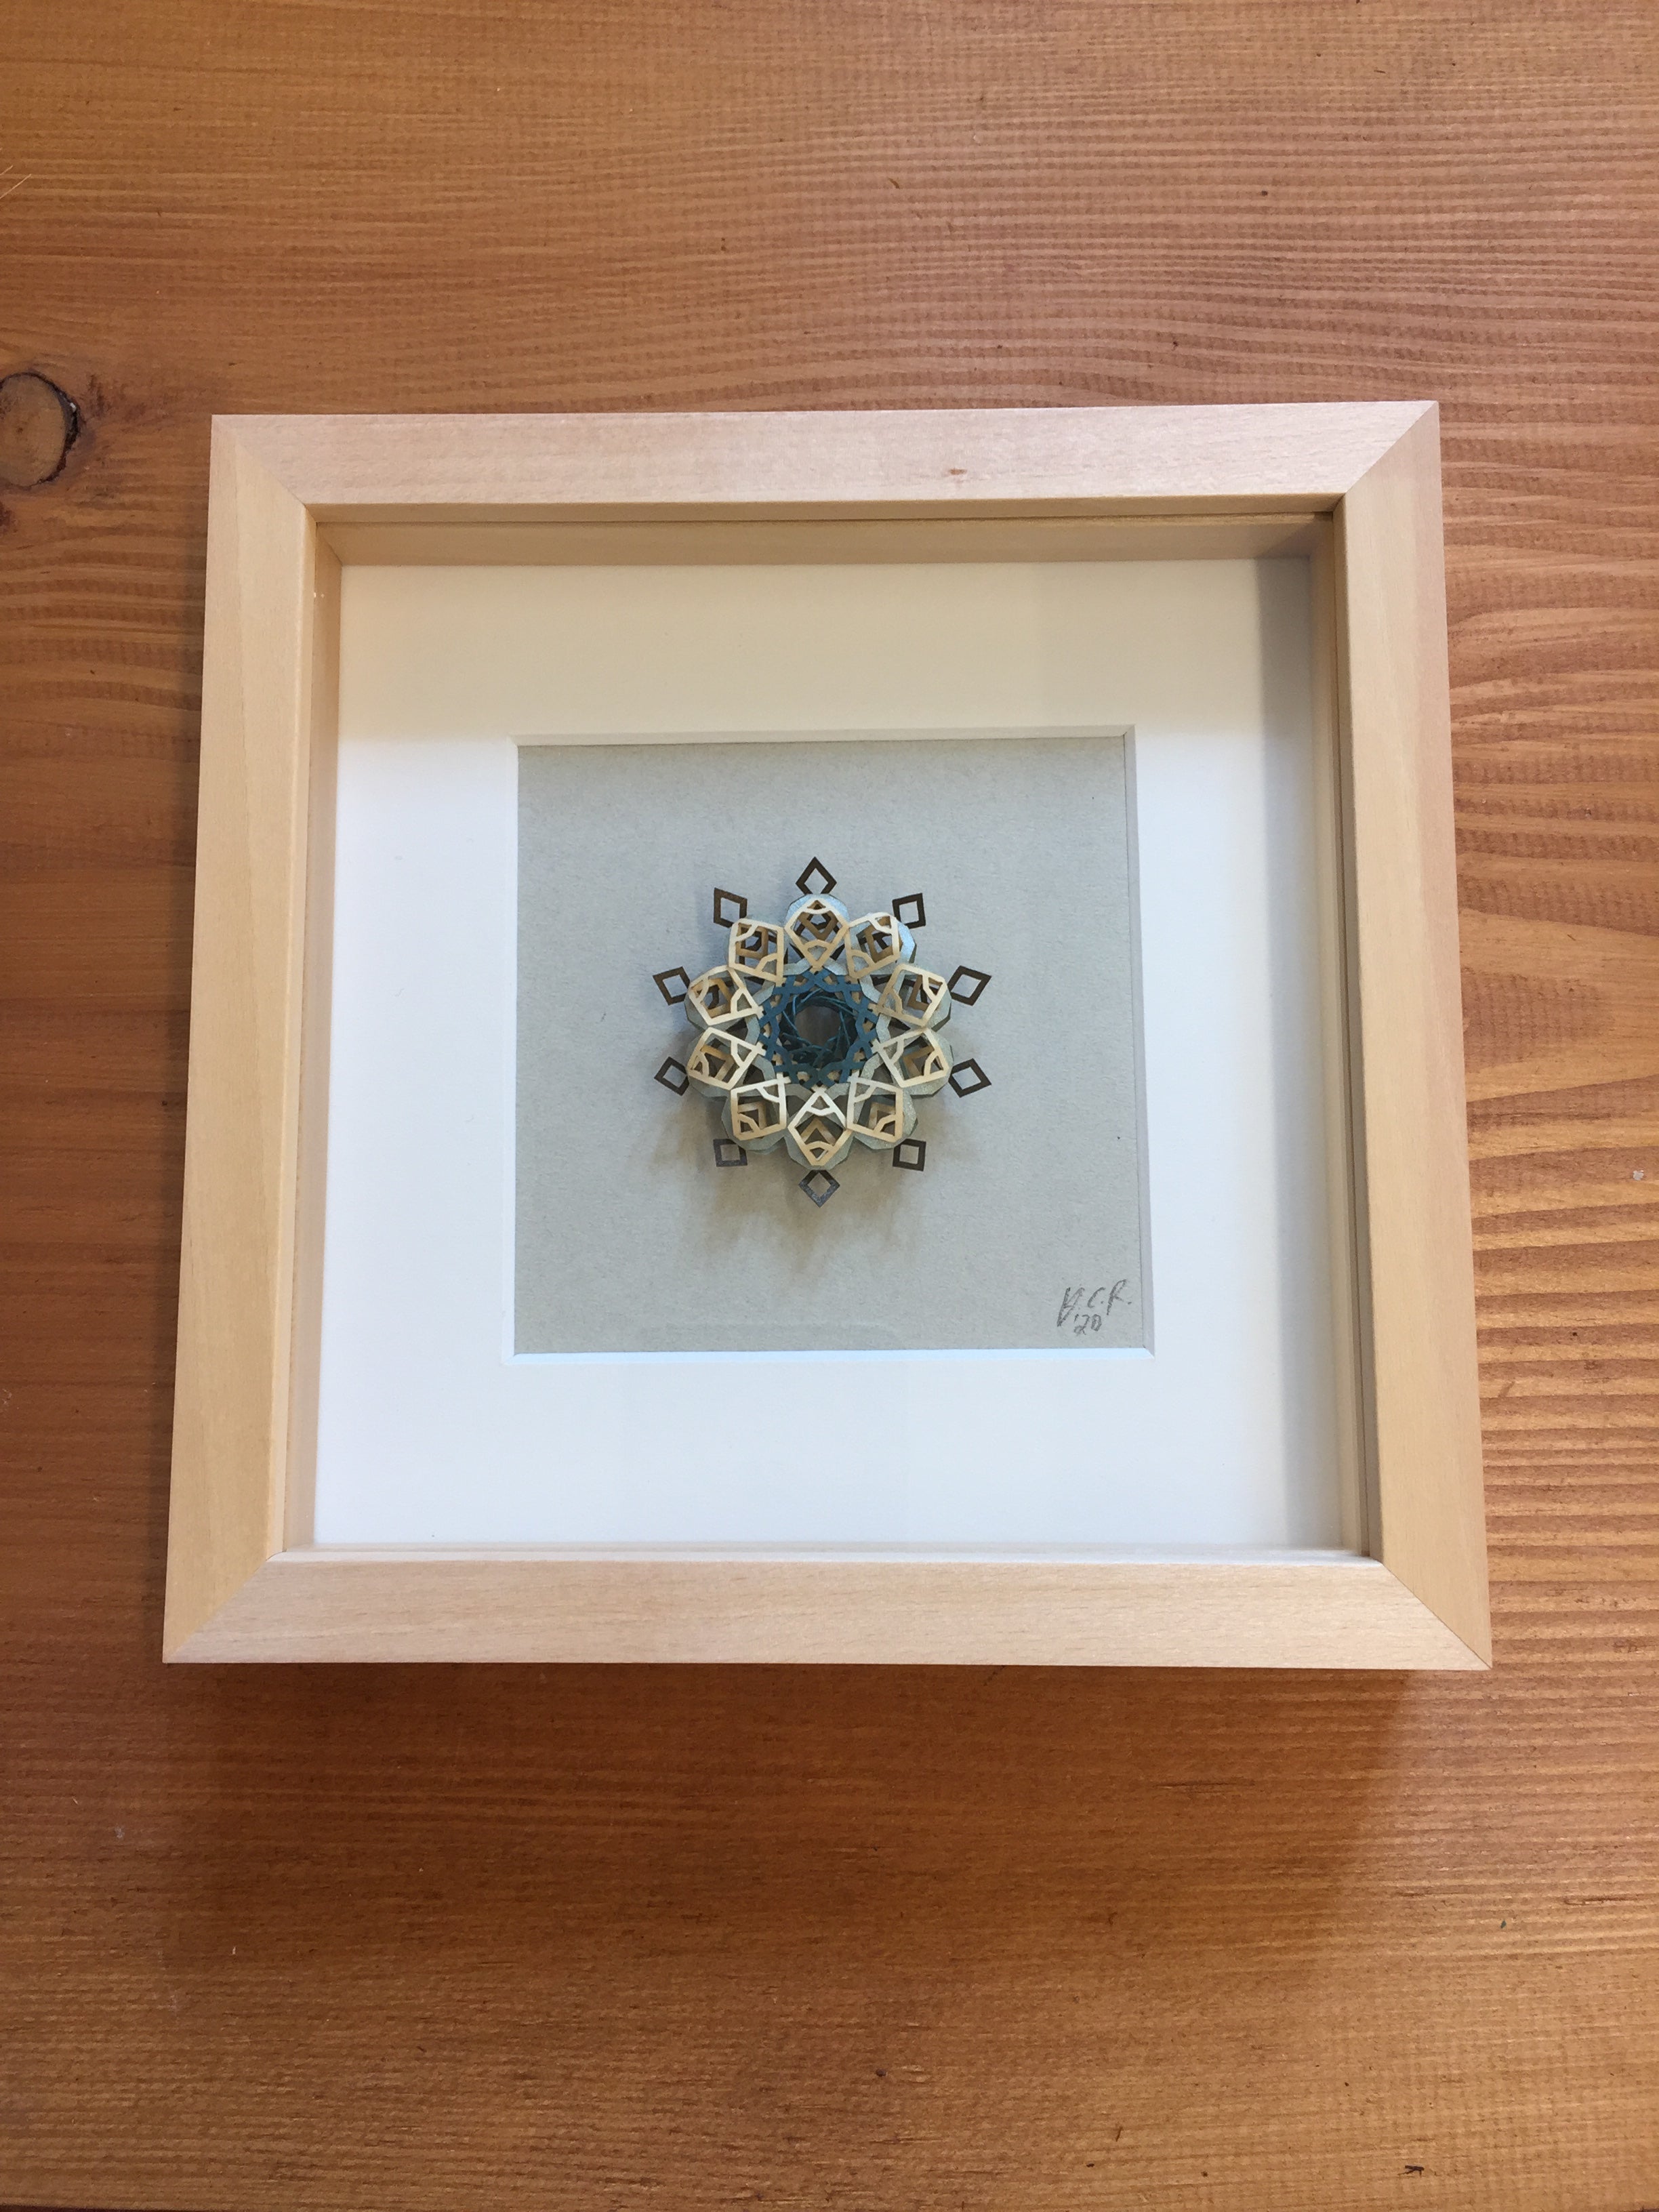 Little Bijou in frame V12 - Ausgefallener Designerschmuck, bracelets/Armbänder, earrings/Ohrringe, necklaces/Ketten